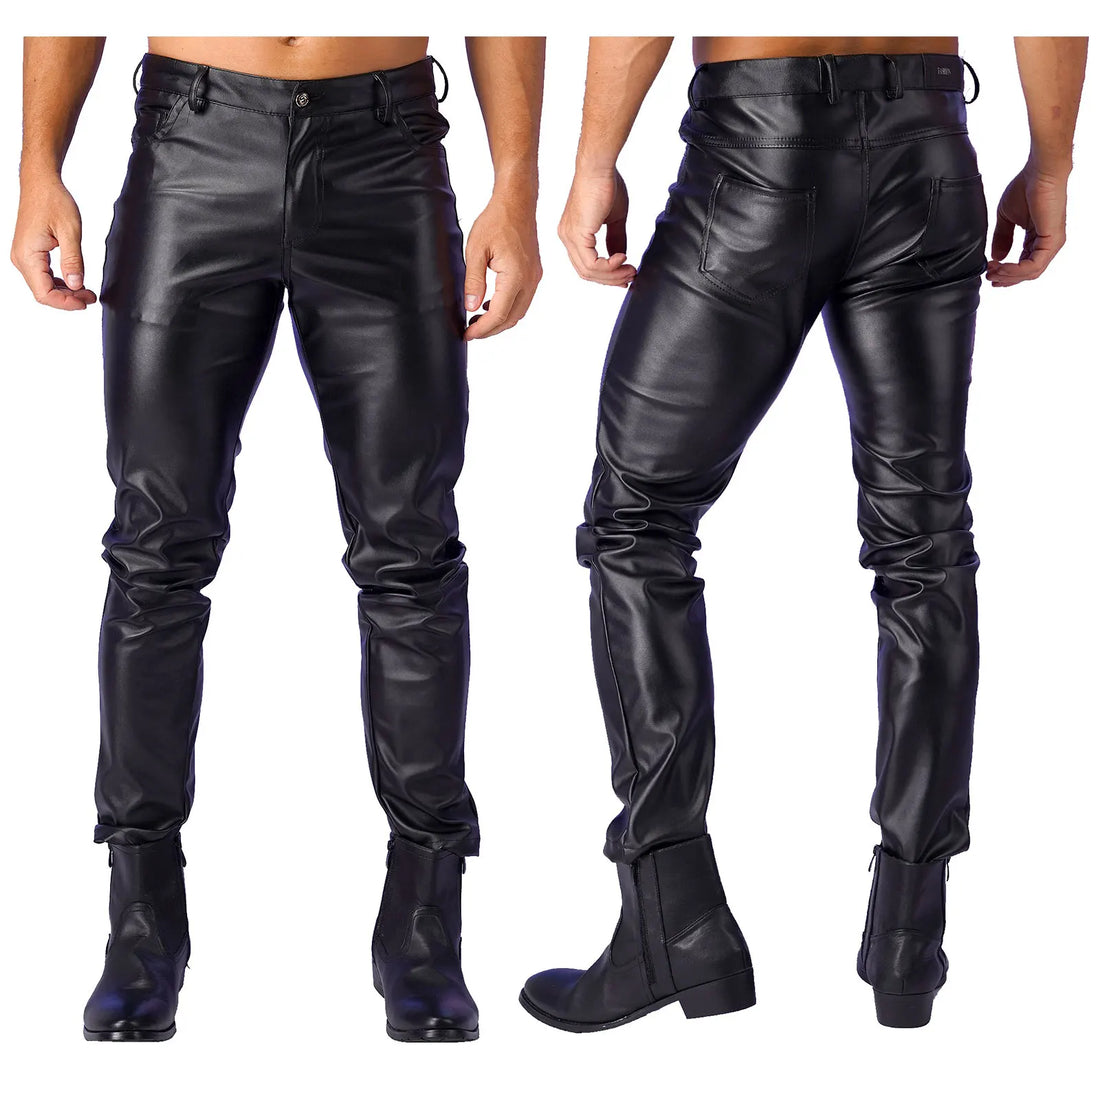 Alaric - Punk Style Leather Pants